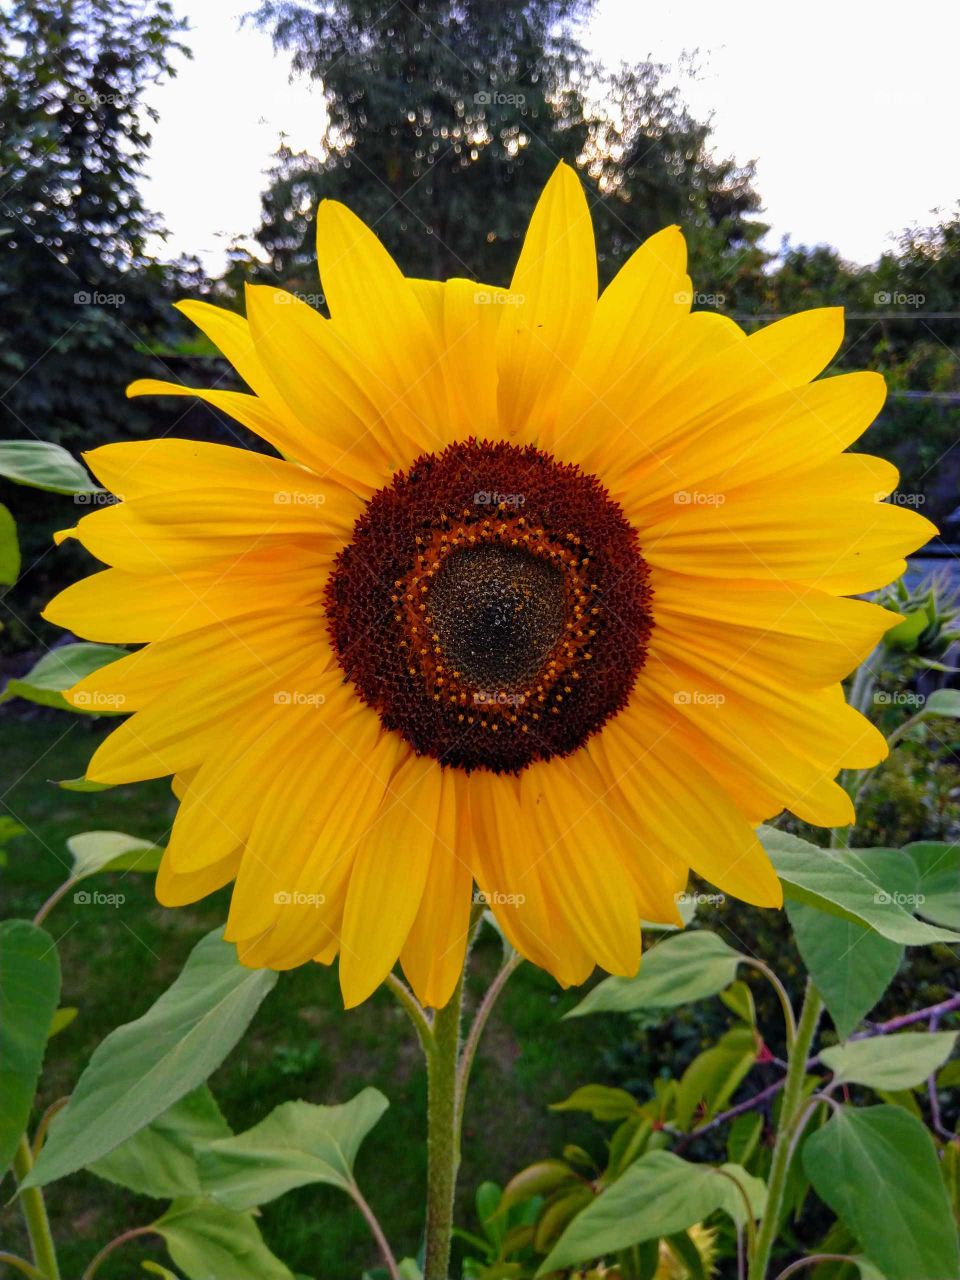 Amazing Sunflower.